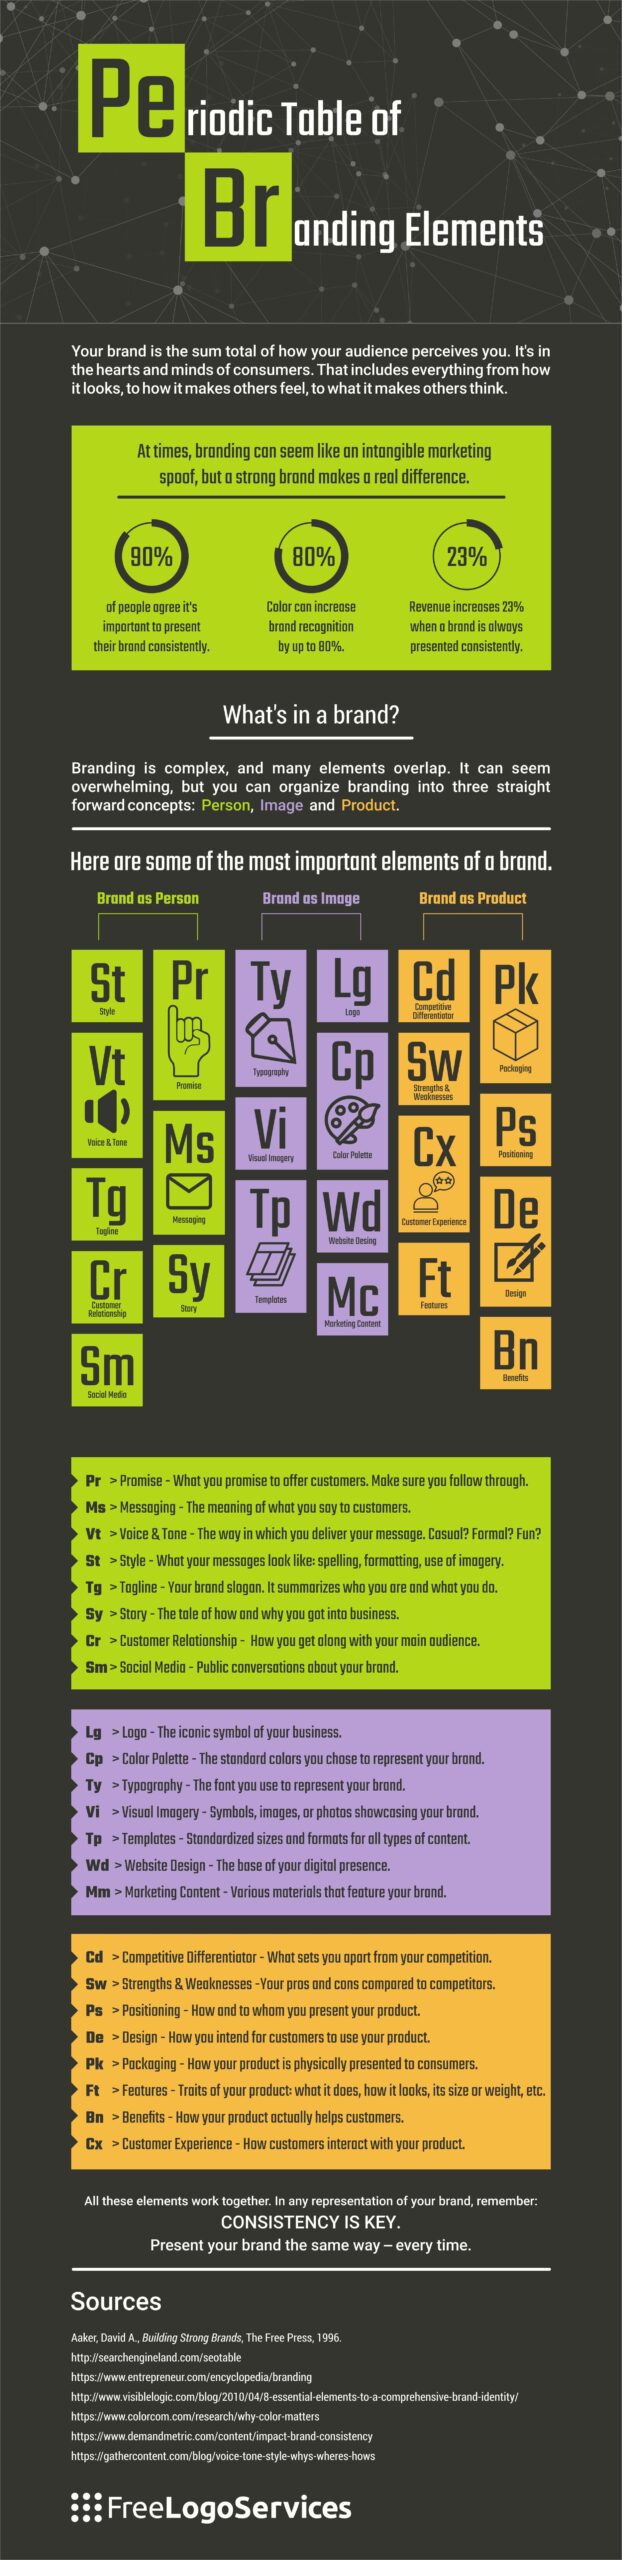 periodic-table-of-branding-elements